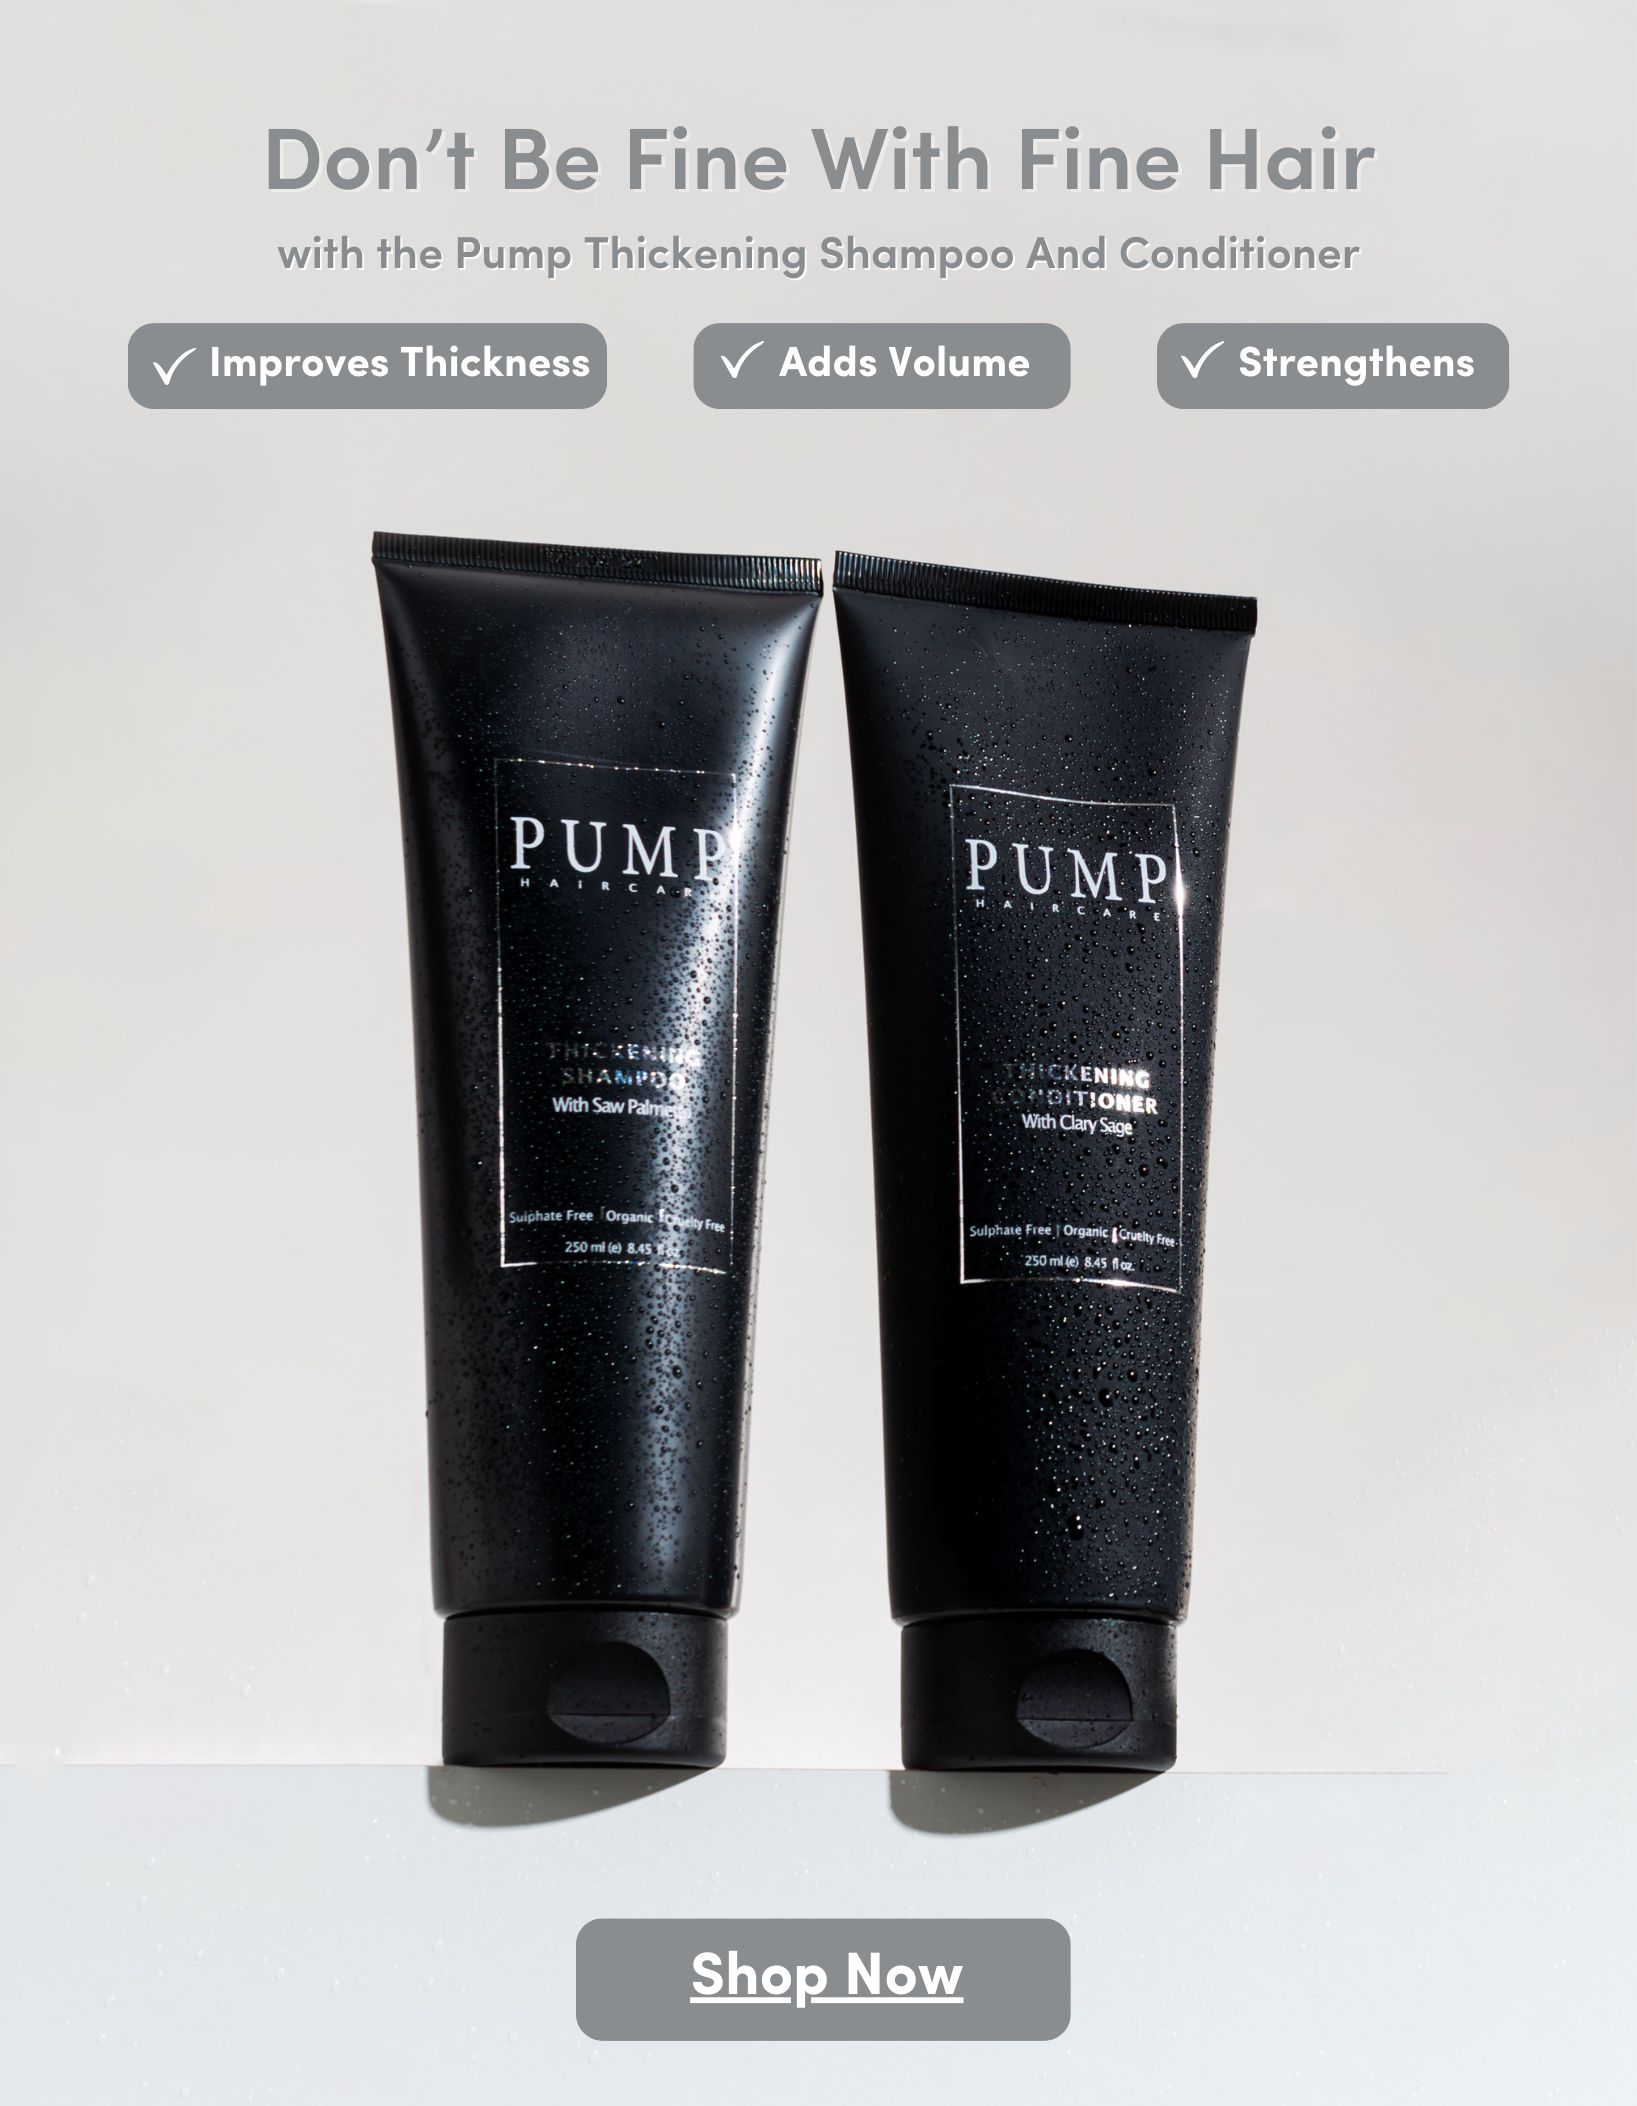 Pump thickening shampoo and conditioner